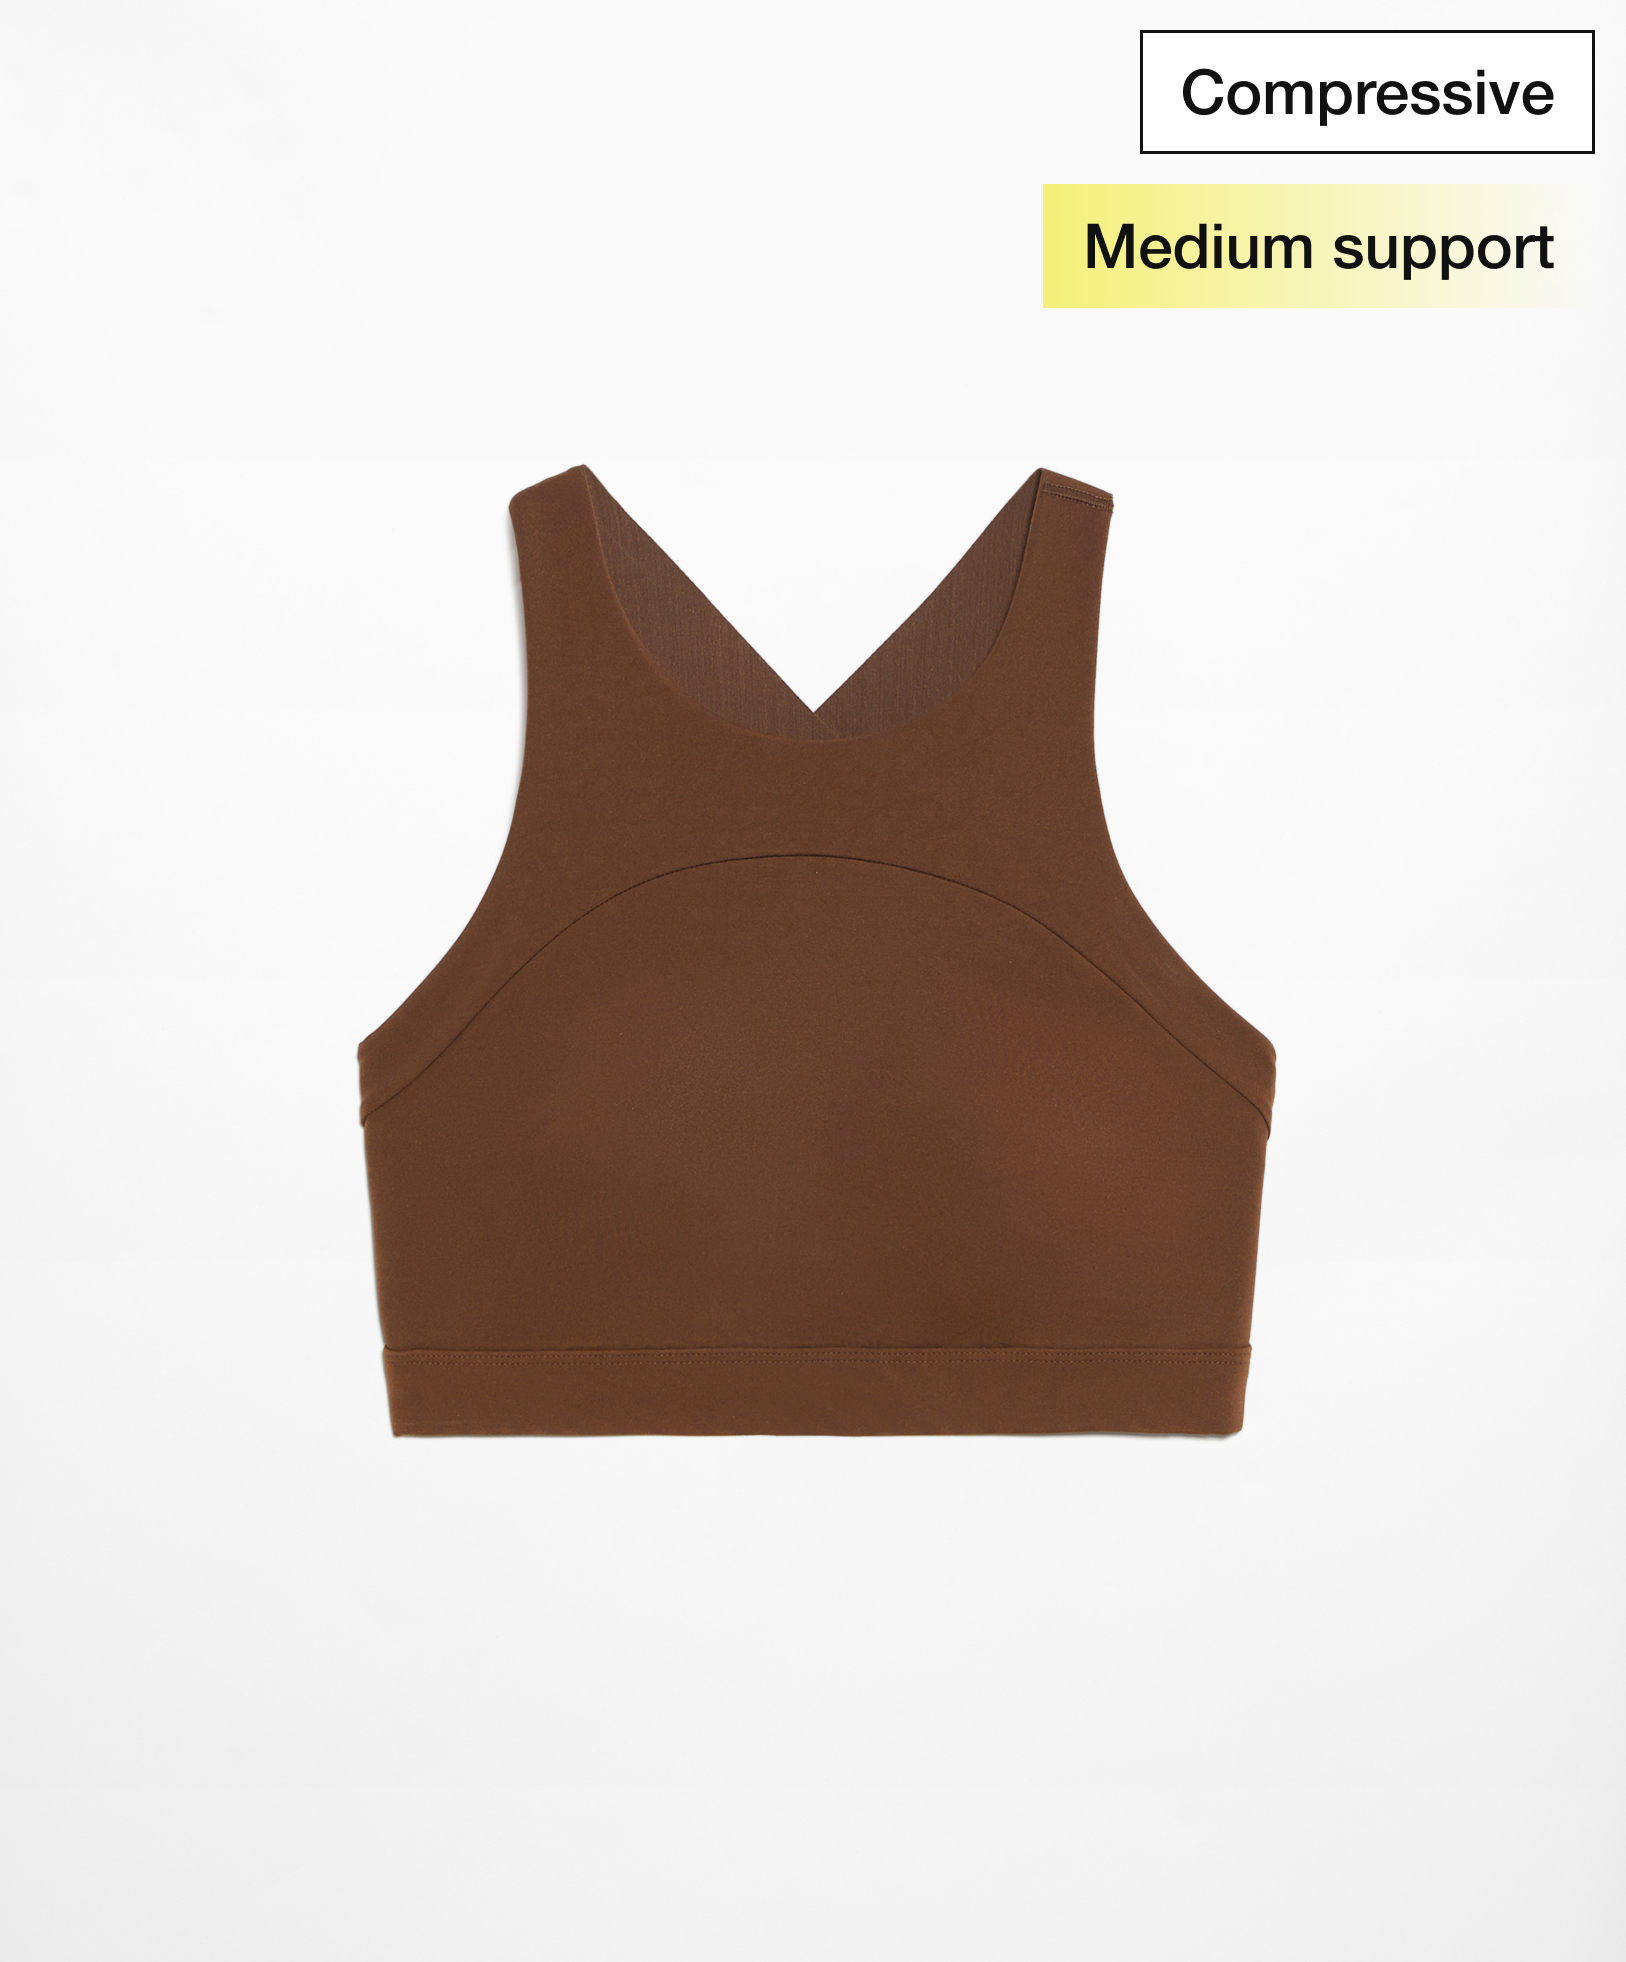 Medium-support crossover back compressive bra